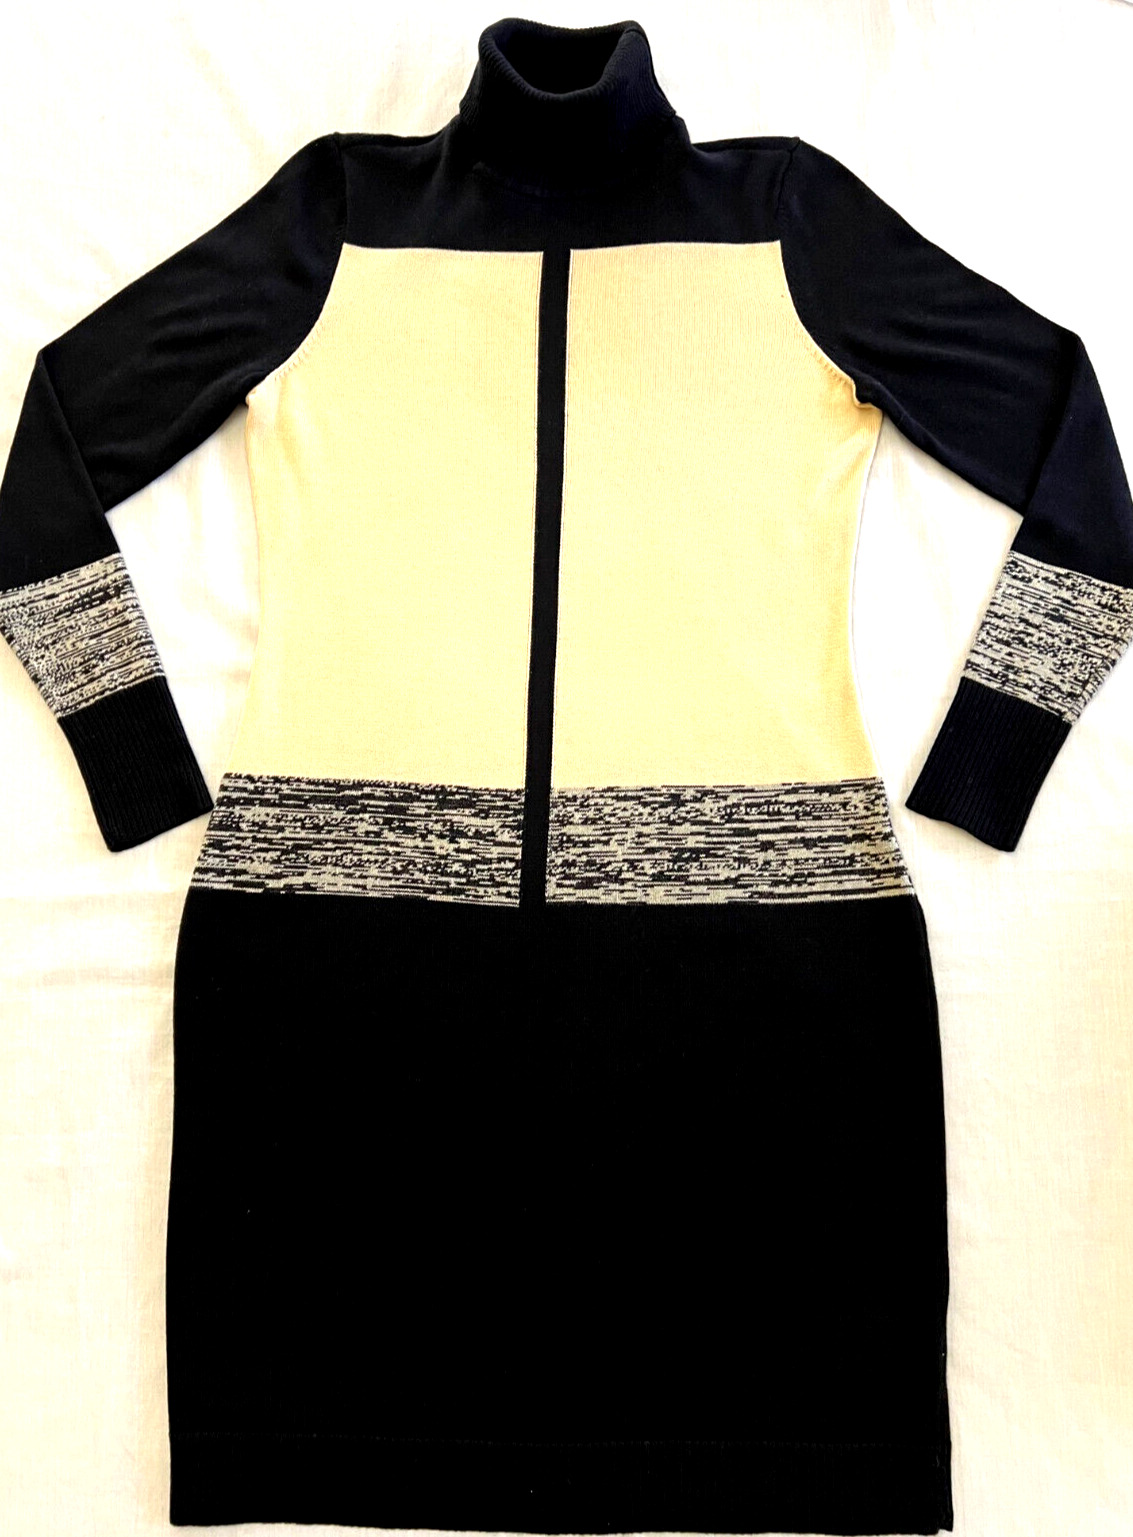 Narciso Rodriguez for Design Nation Sweater Dress Size M Black Cream Turtleneck